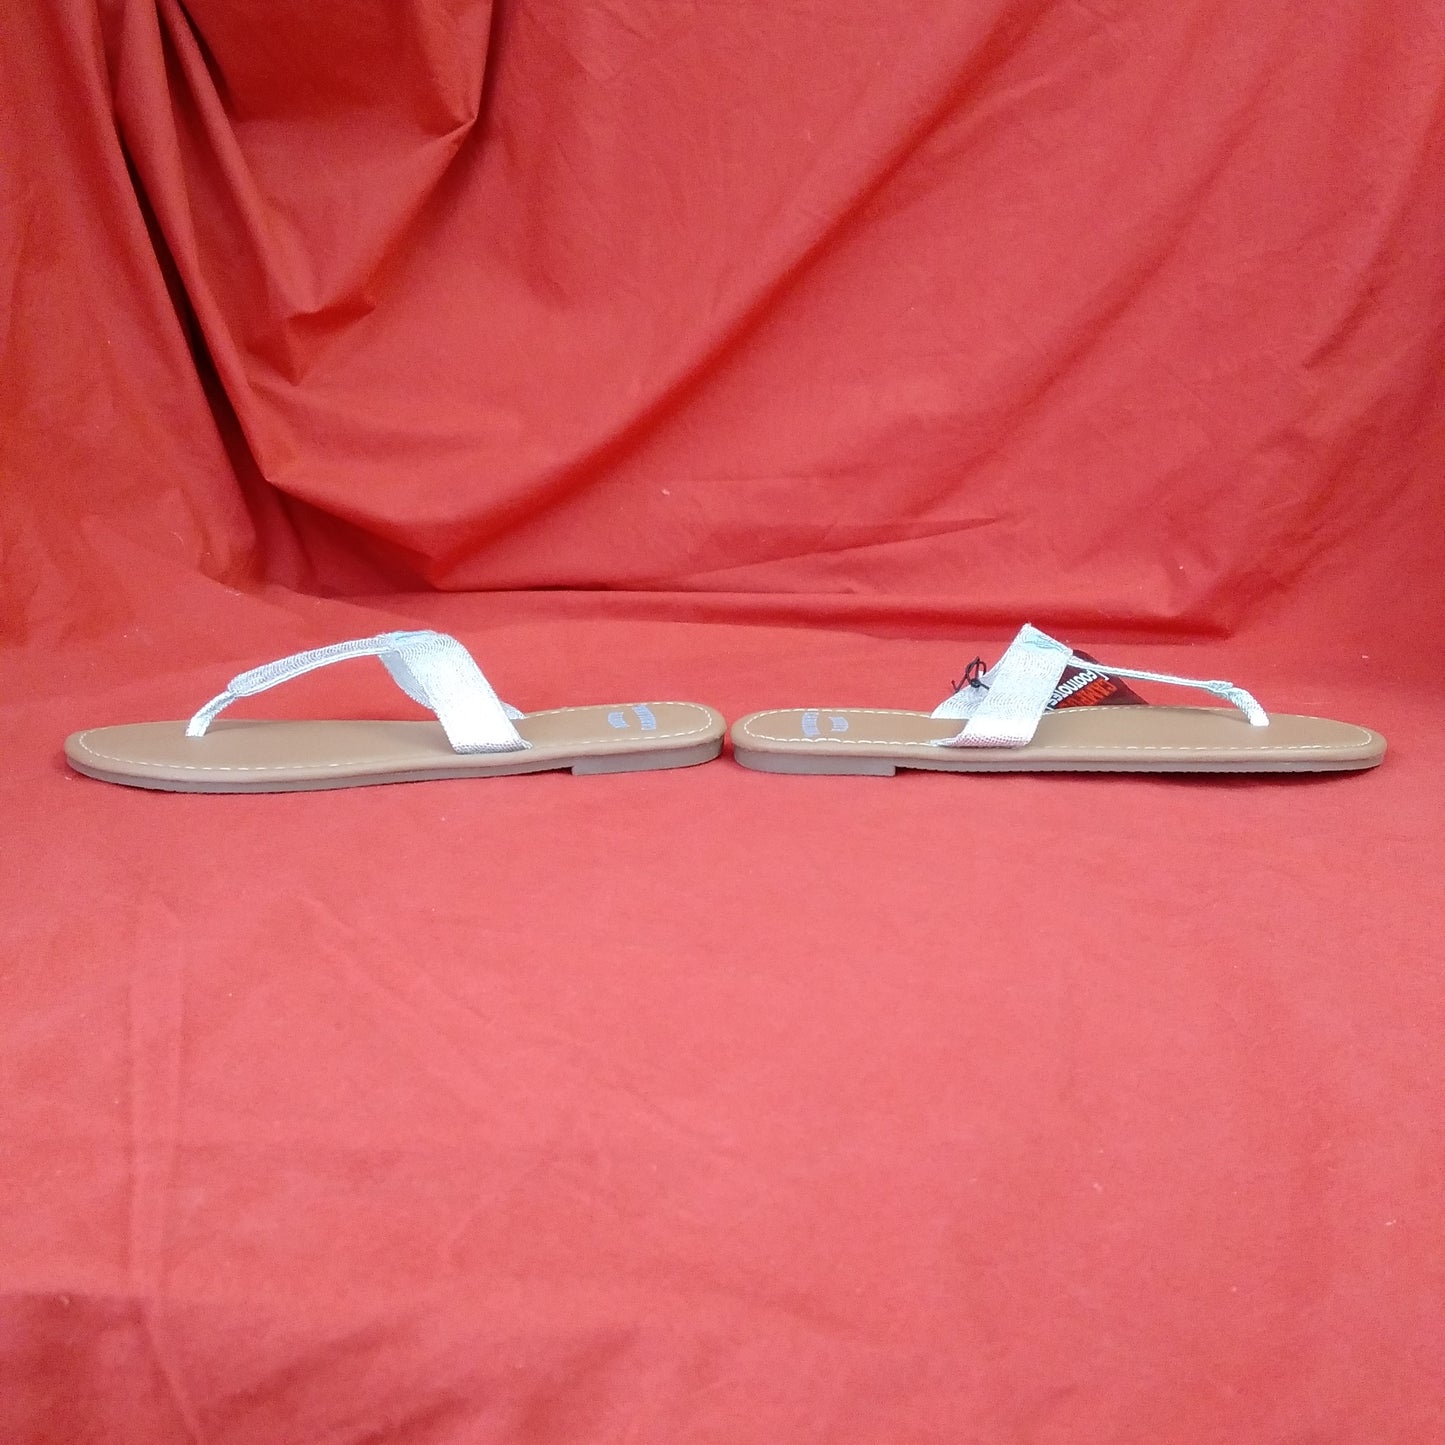 NWT - North Carolina Tar Heels Silver Strap Flip-Flops - Size: 7